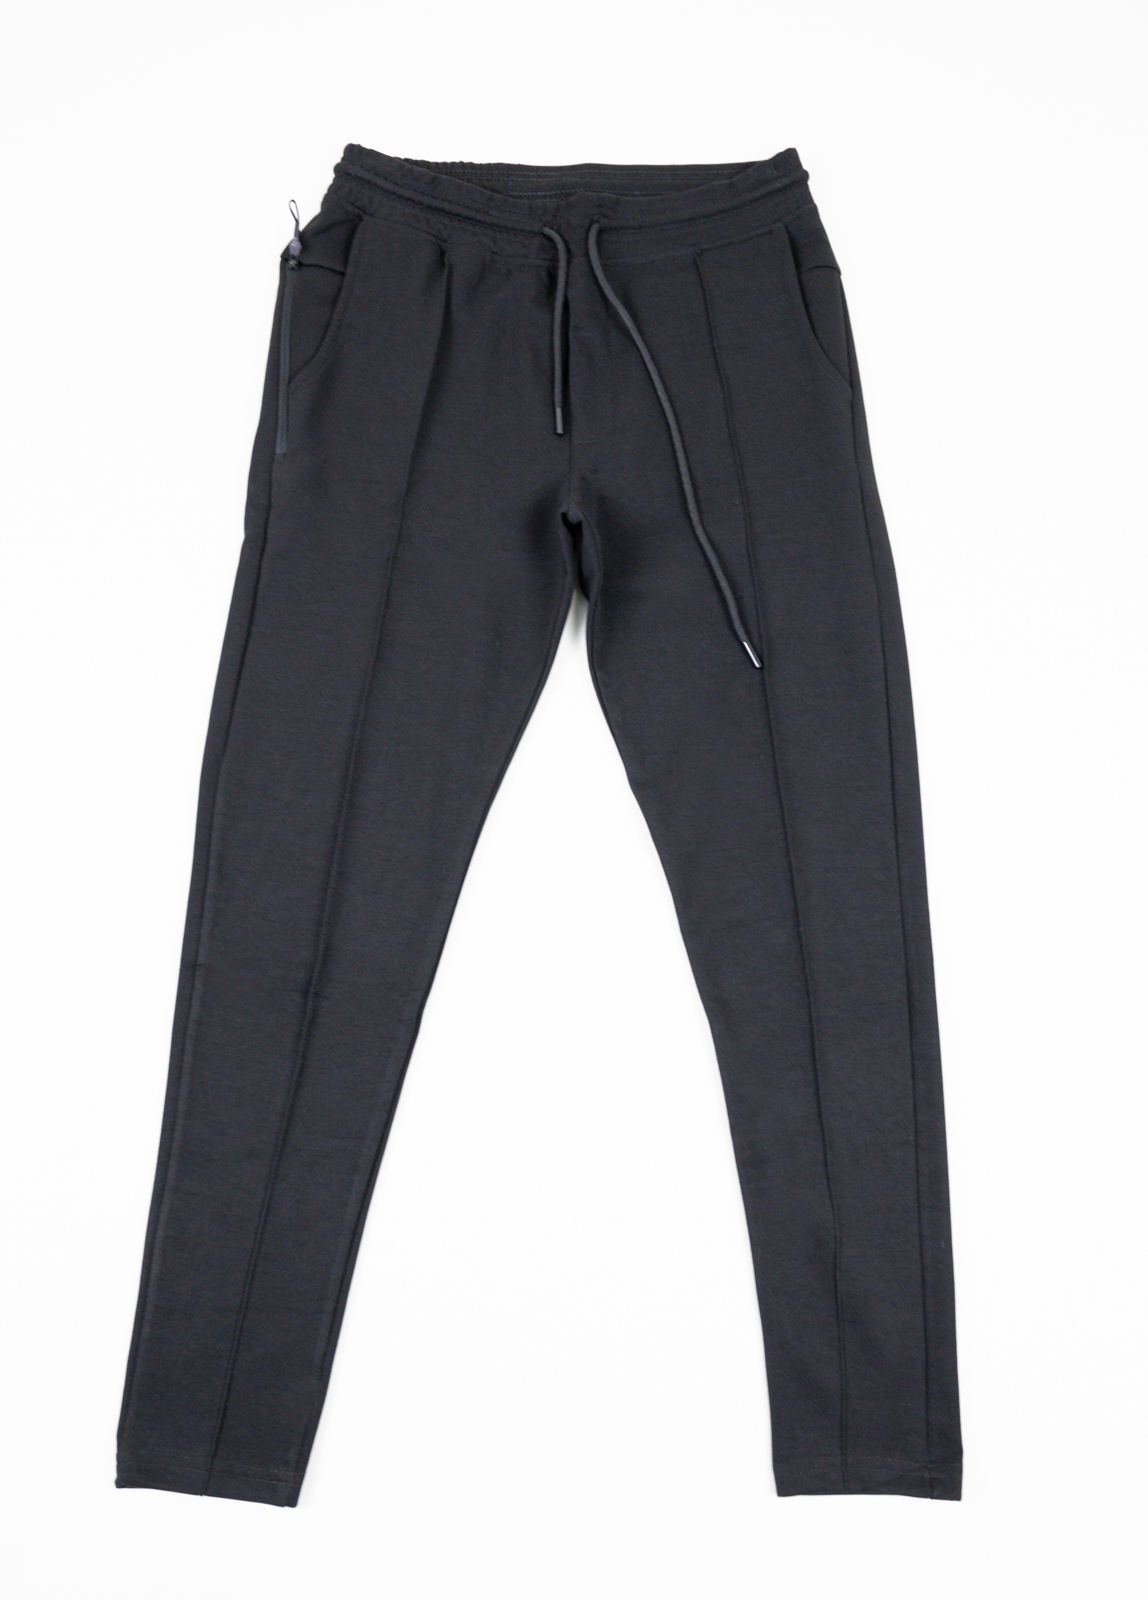 Pantaloni Trening Negru si Cusatura pe Picior - EfectStyle